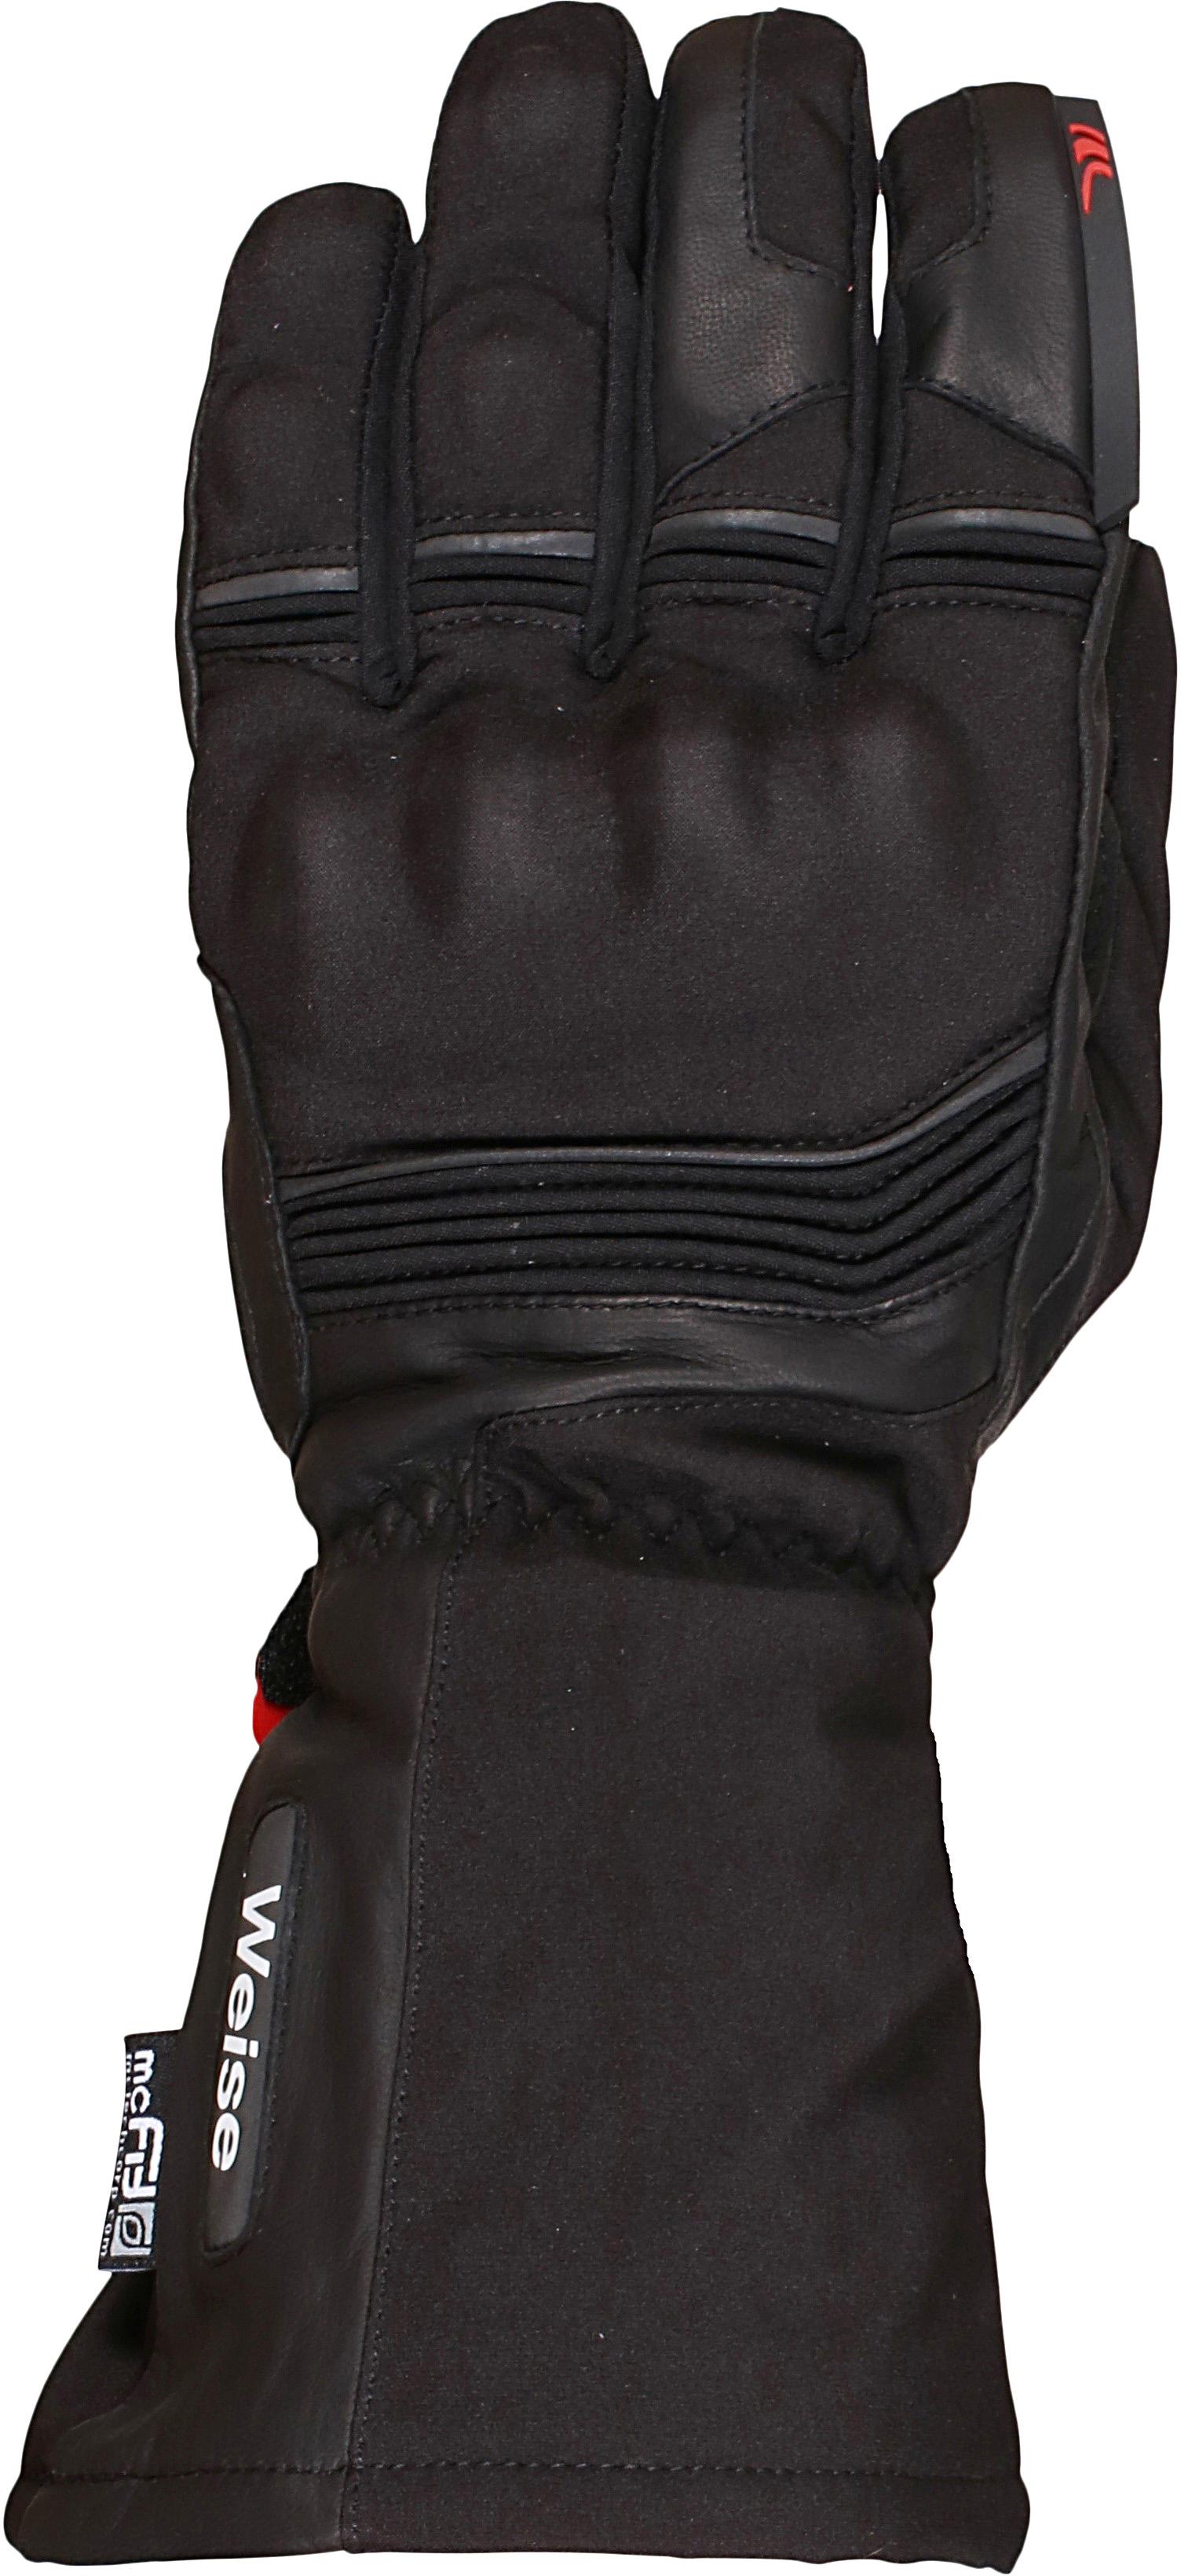 Weise Montana 150 Motorcycle Gloves - Black, 3Xl